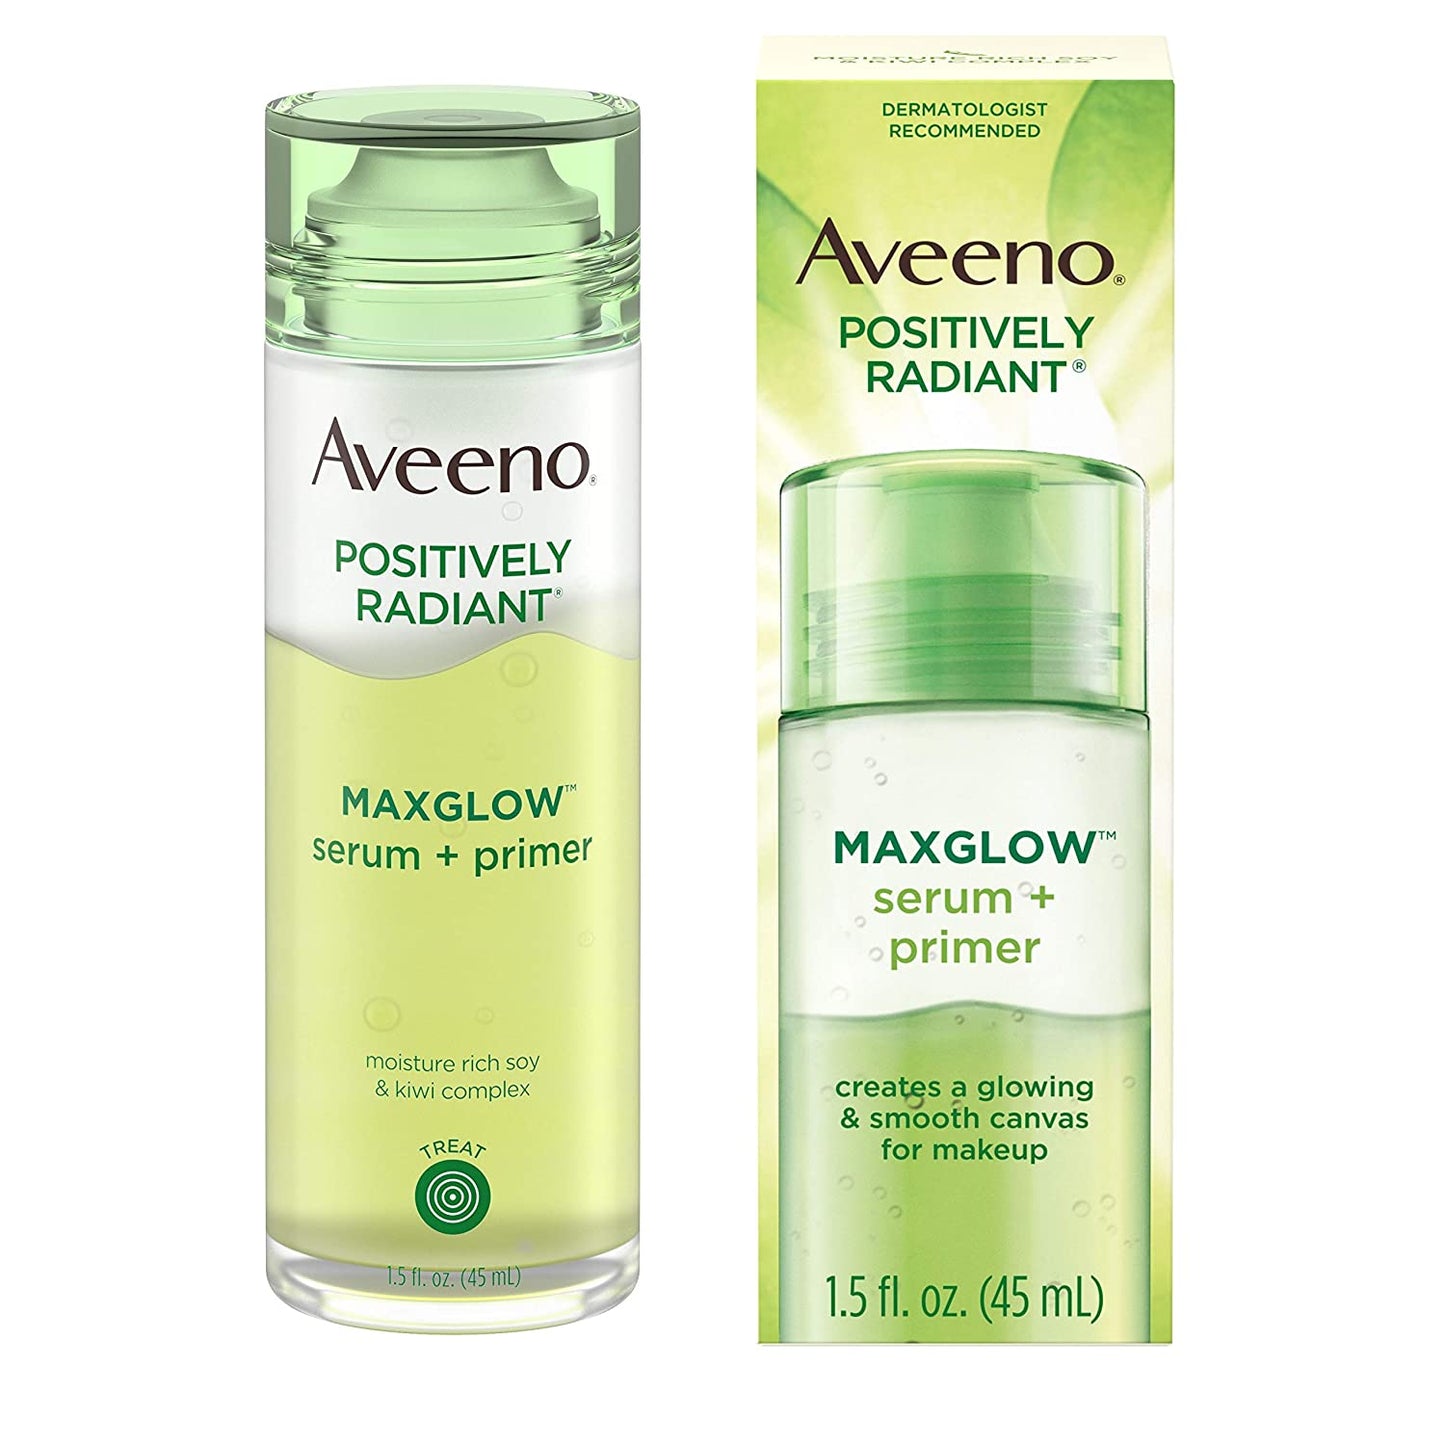 Aveeno Positively Radiant MaxGlow Hydrating Face Serum + Primer